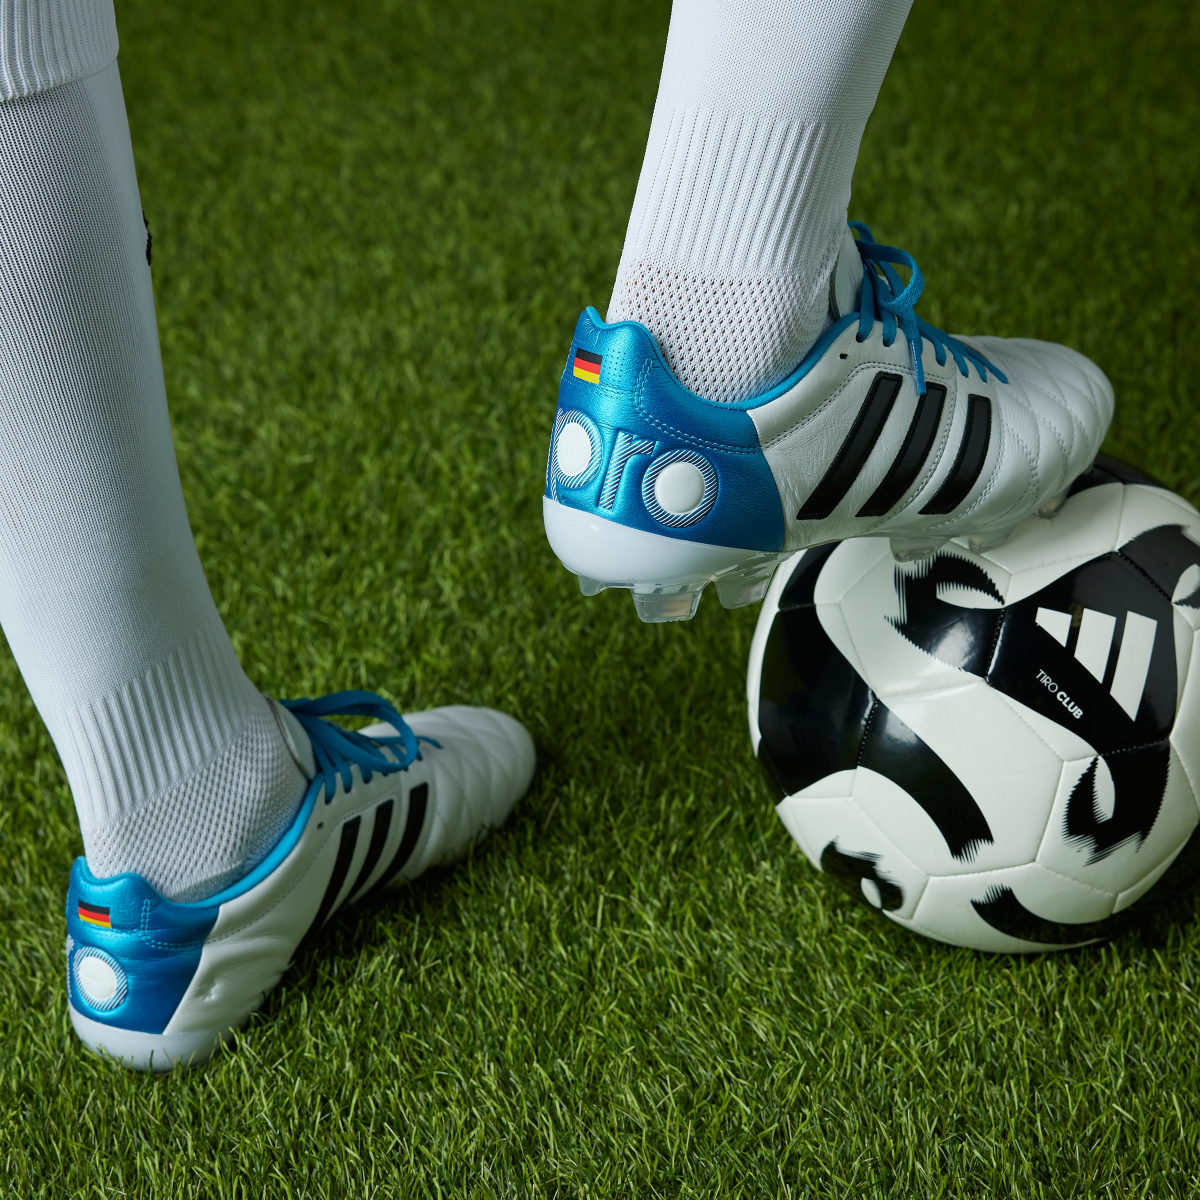 Adidas Botas de Futebol 11Pro Toni Kroos – Piso firme. 6